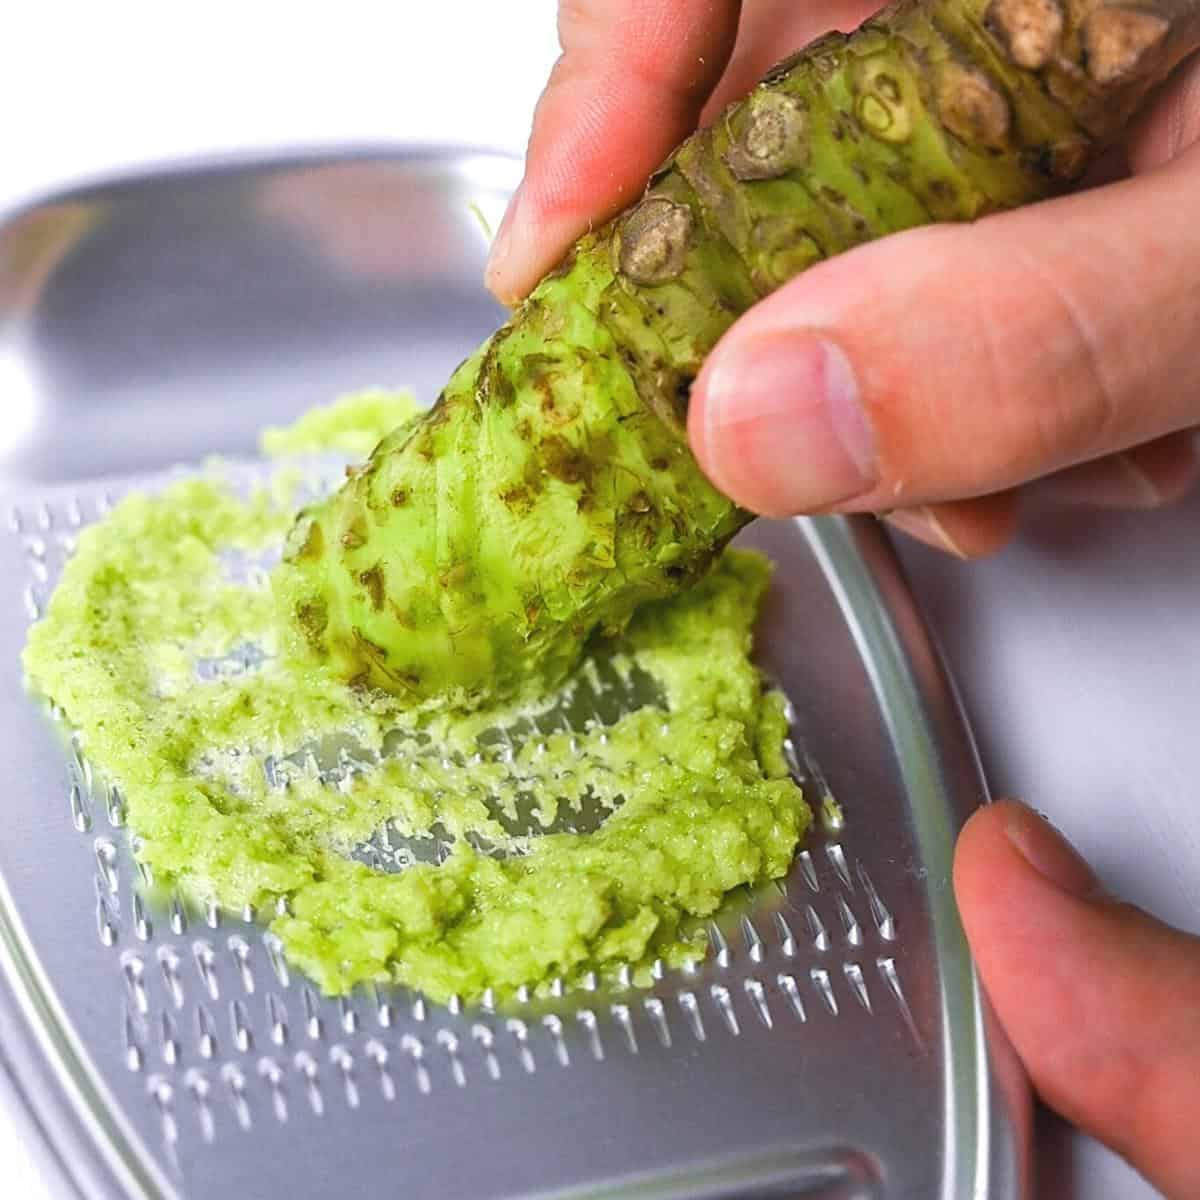 https://sudachirecipes.com/wp-content/uploads/2022/08/wasabi-paste-thumb.jpg